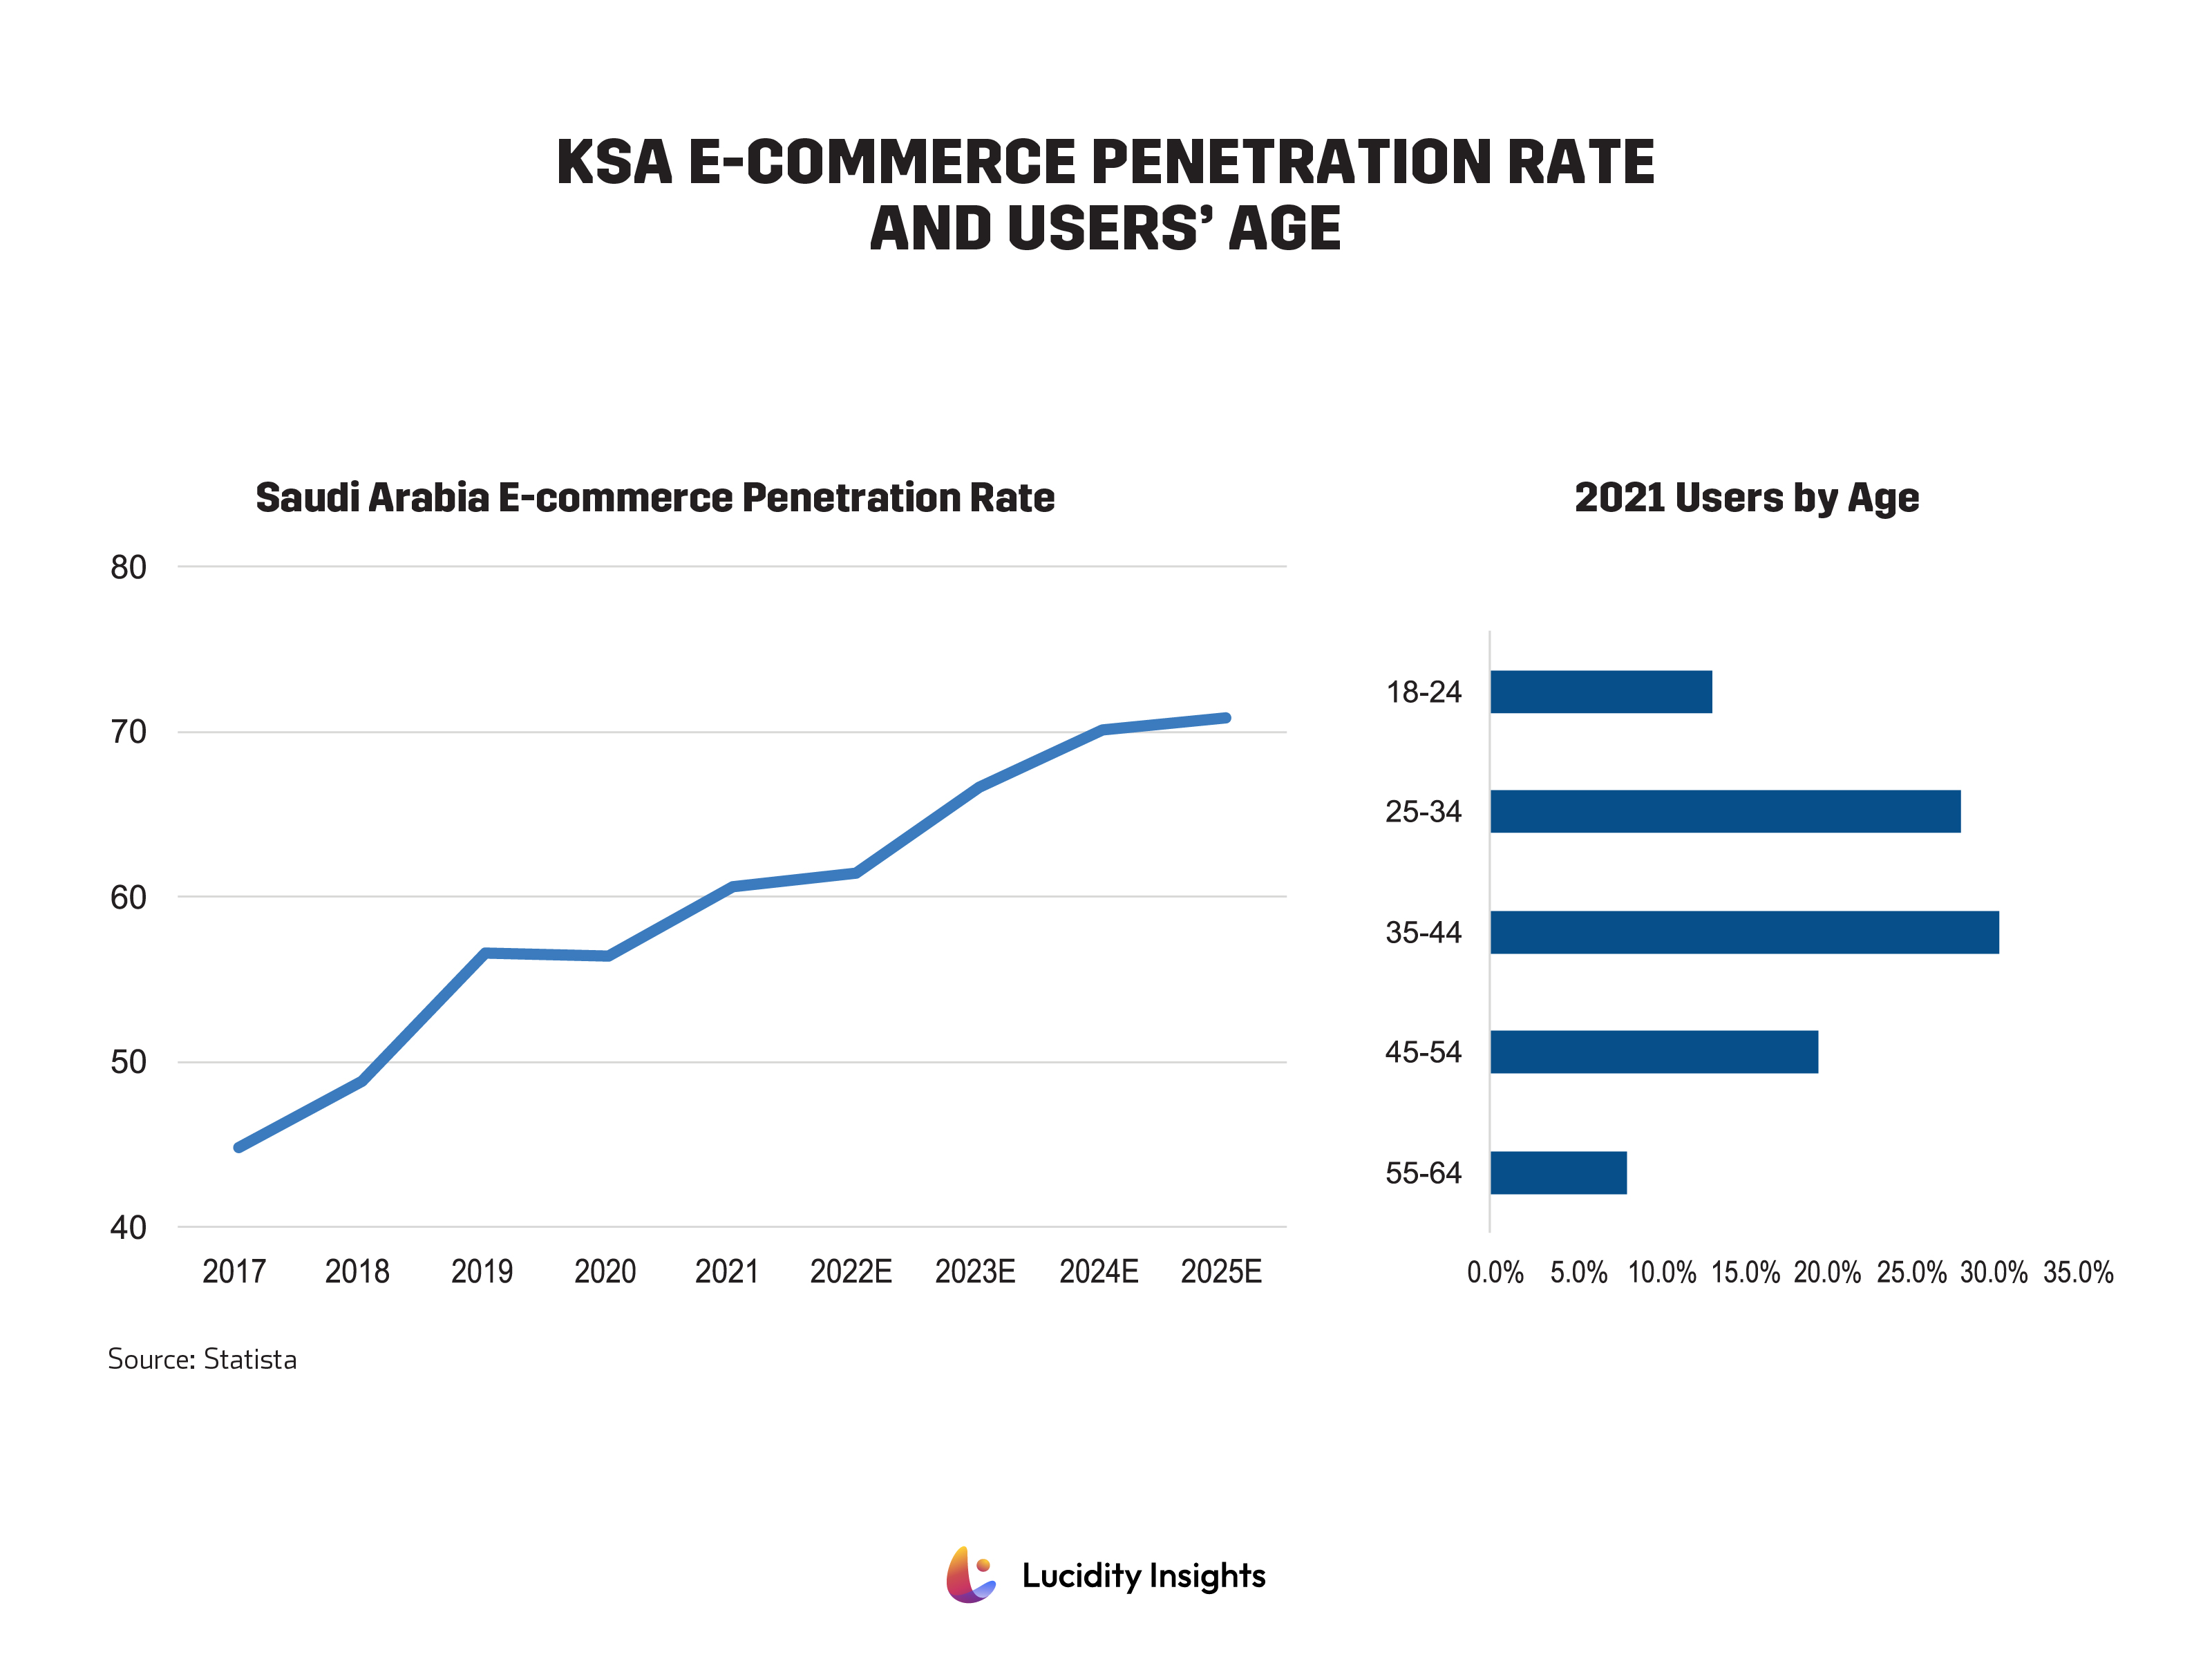 KSA E-Commerce Penetration Rate and Users' Age in Saudi Arabia